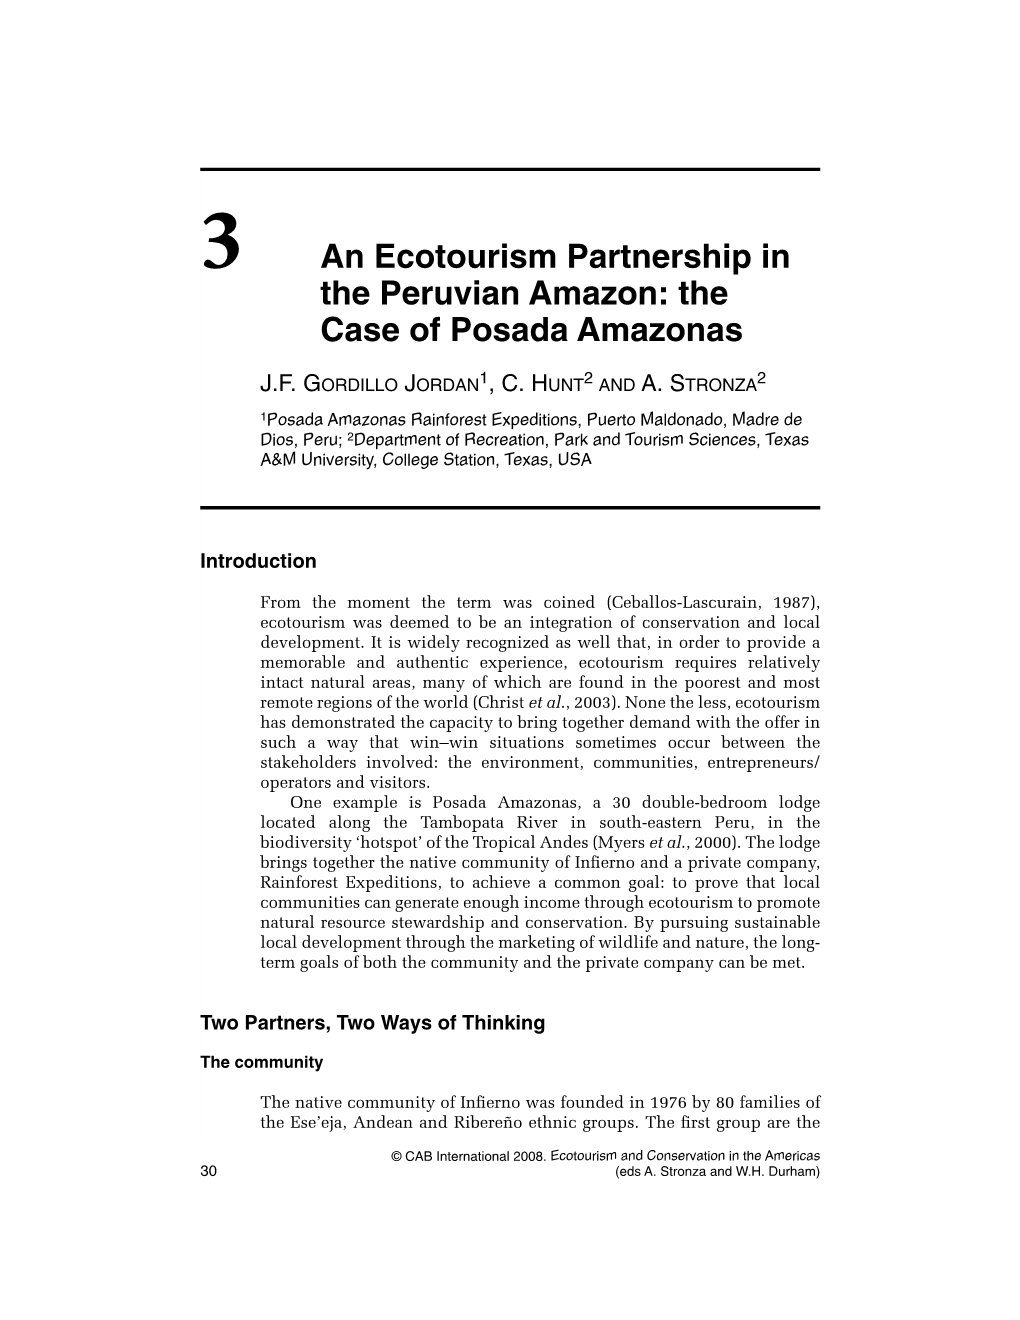 3 an Ecotourism Partnership in the Peruvian Amazon: the Case of Posada Amazonas